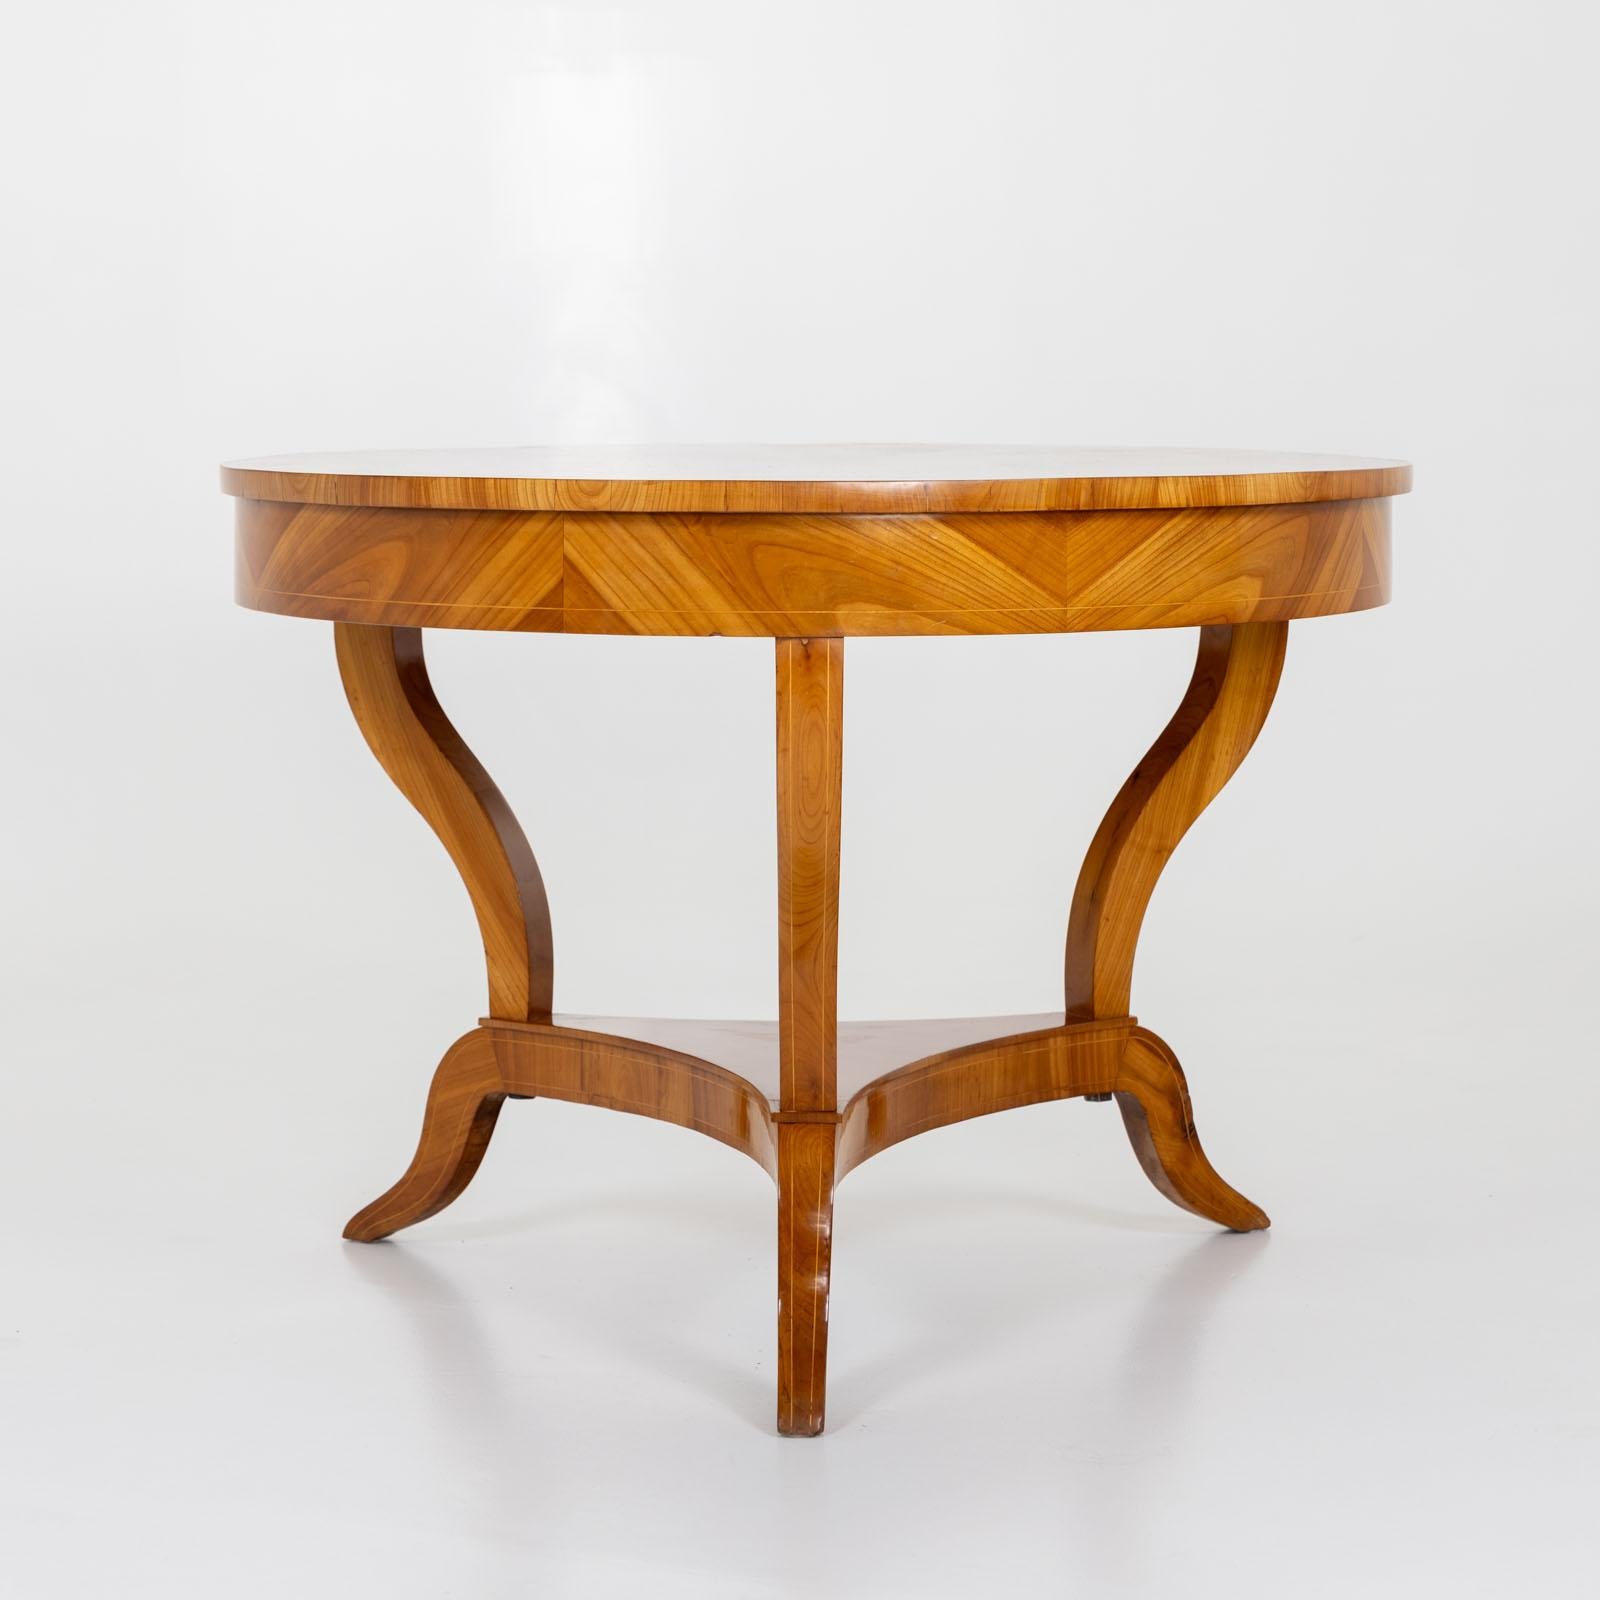 German Biedermeier Salon Table, around 1820 For Sale